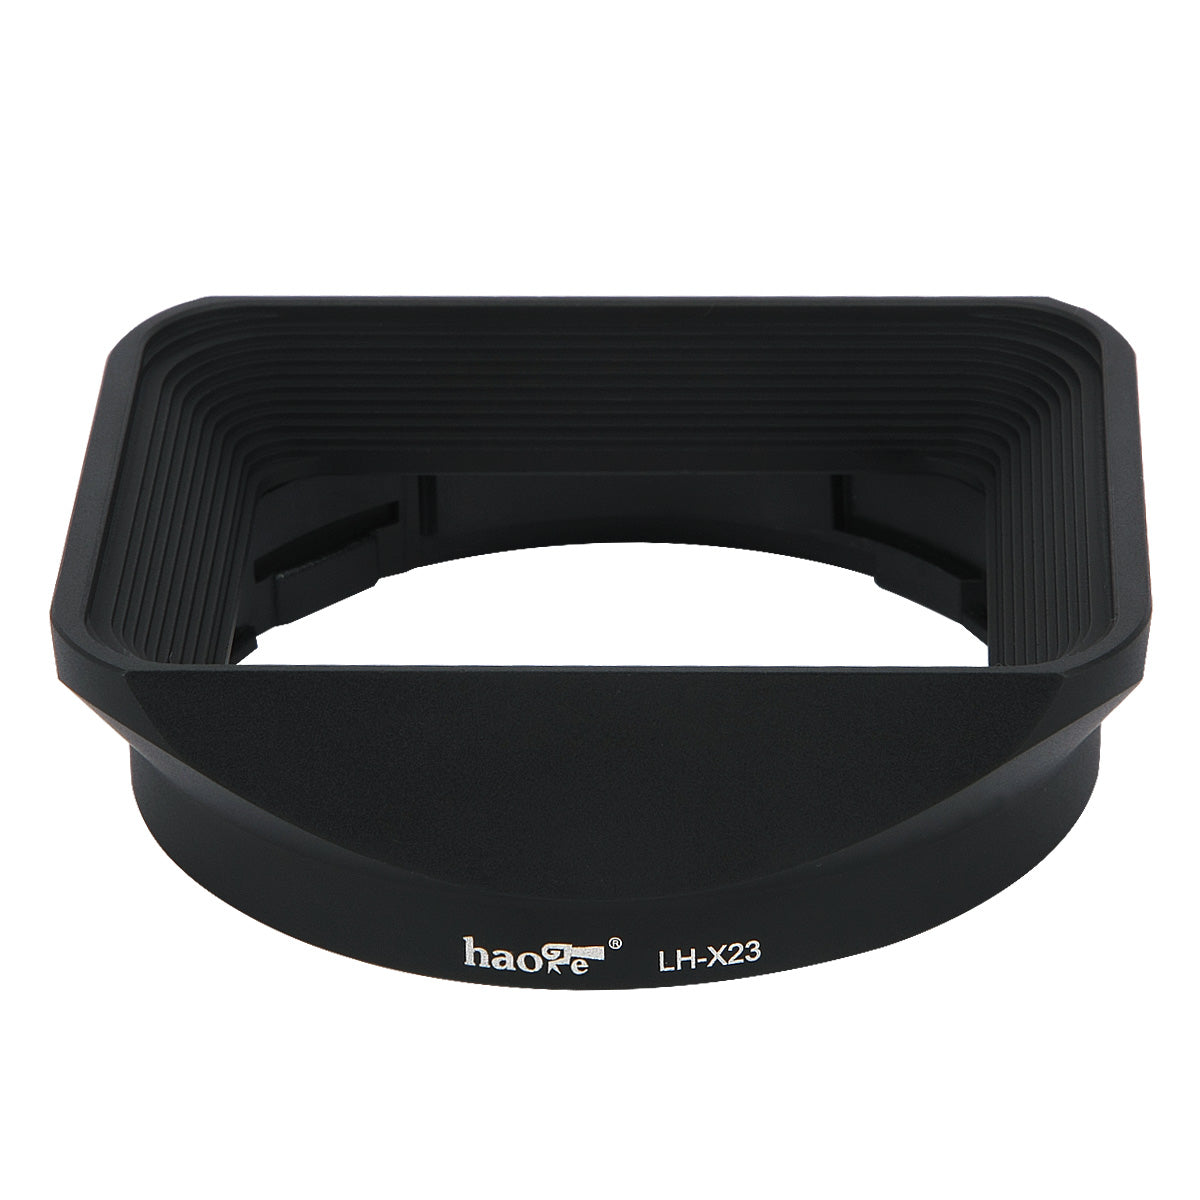 Haoge LH-X23 Square Metal Lens Hood Shade with Cap for Fujifilm Fuji Fujinon XF 23mm F1.4 R lens